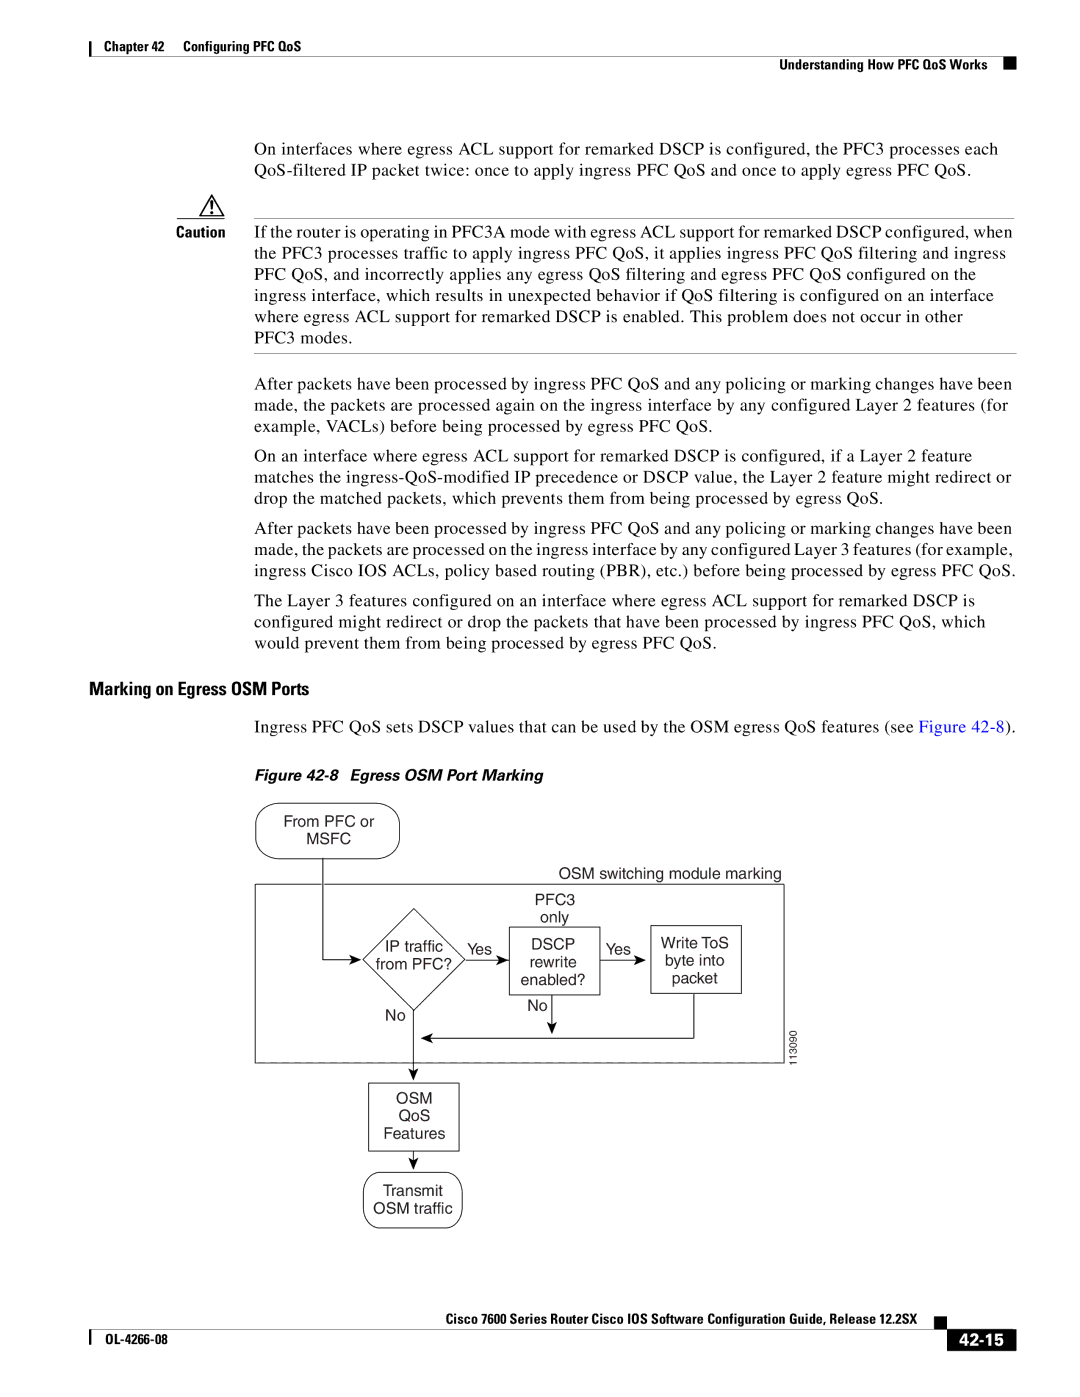 Cisco Systems OL-4266-08 manual Marking on Egress OSM Ports, 42-15 